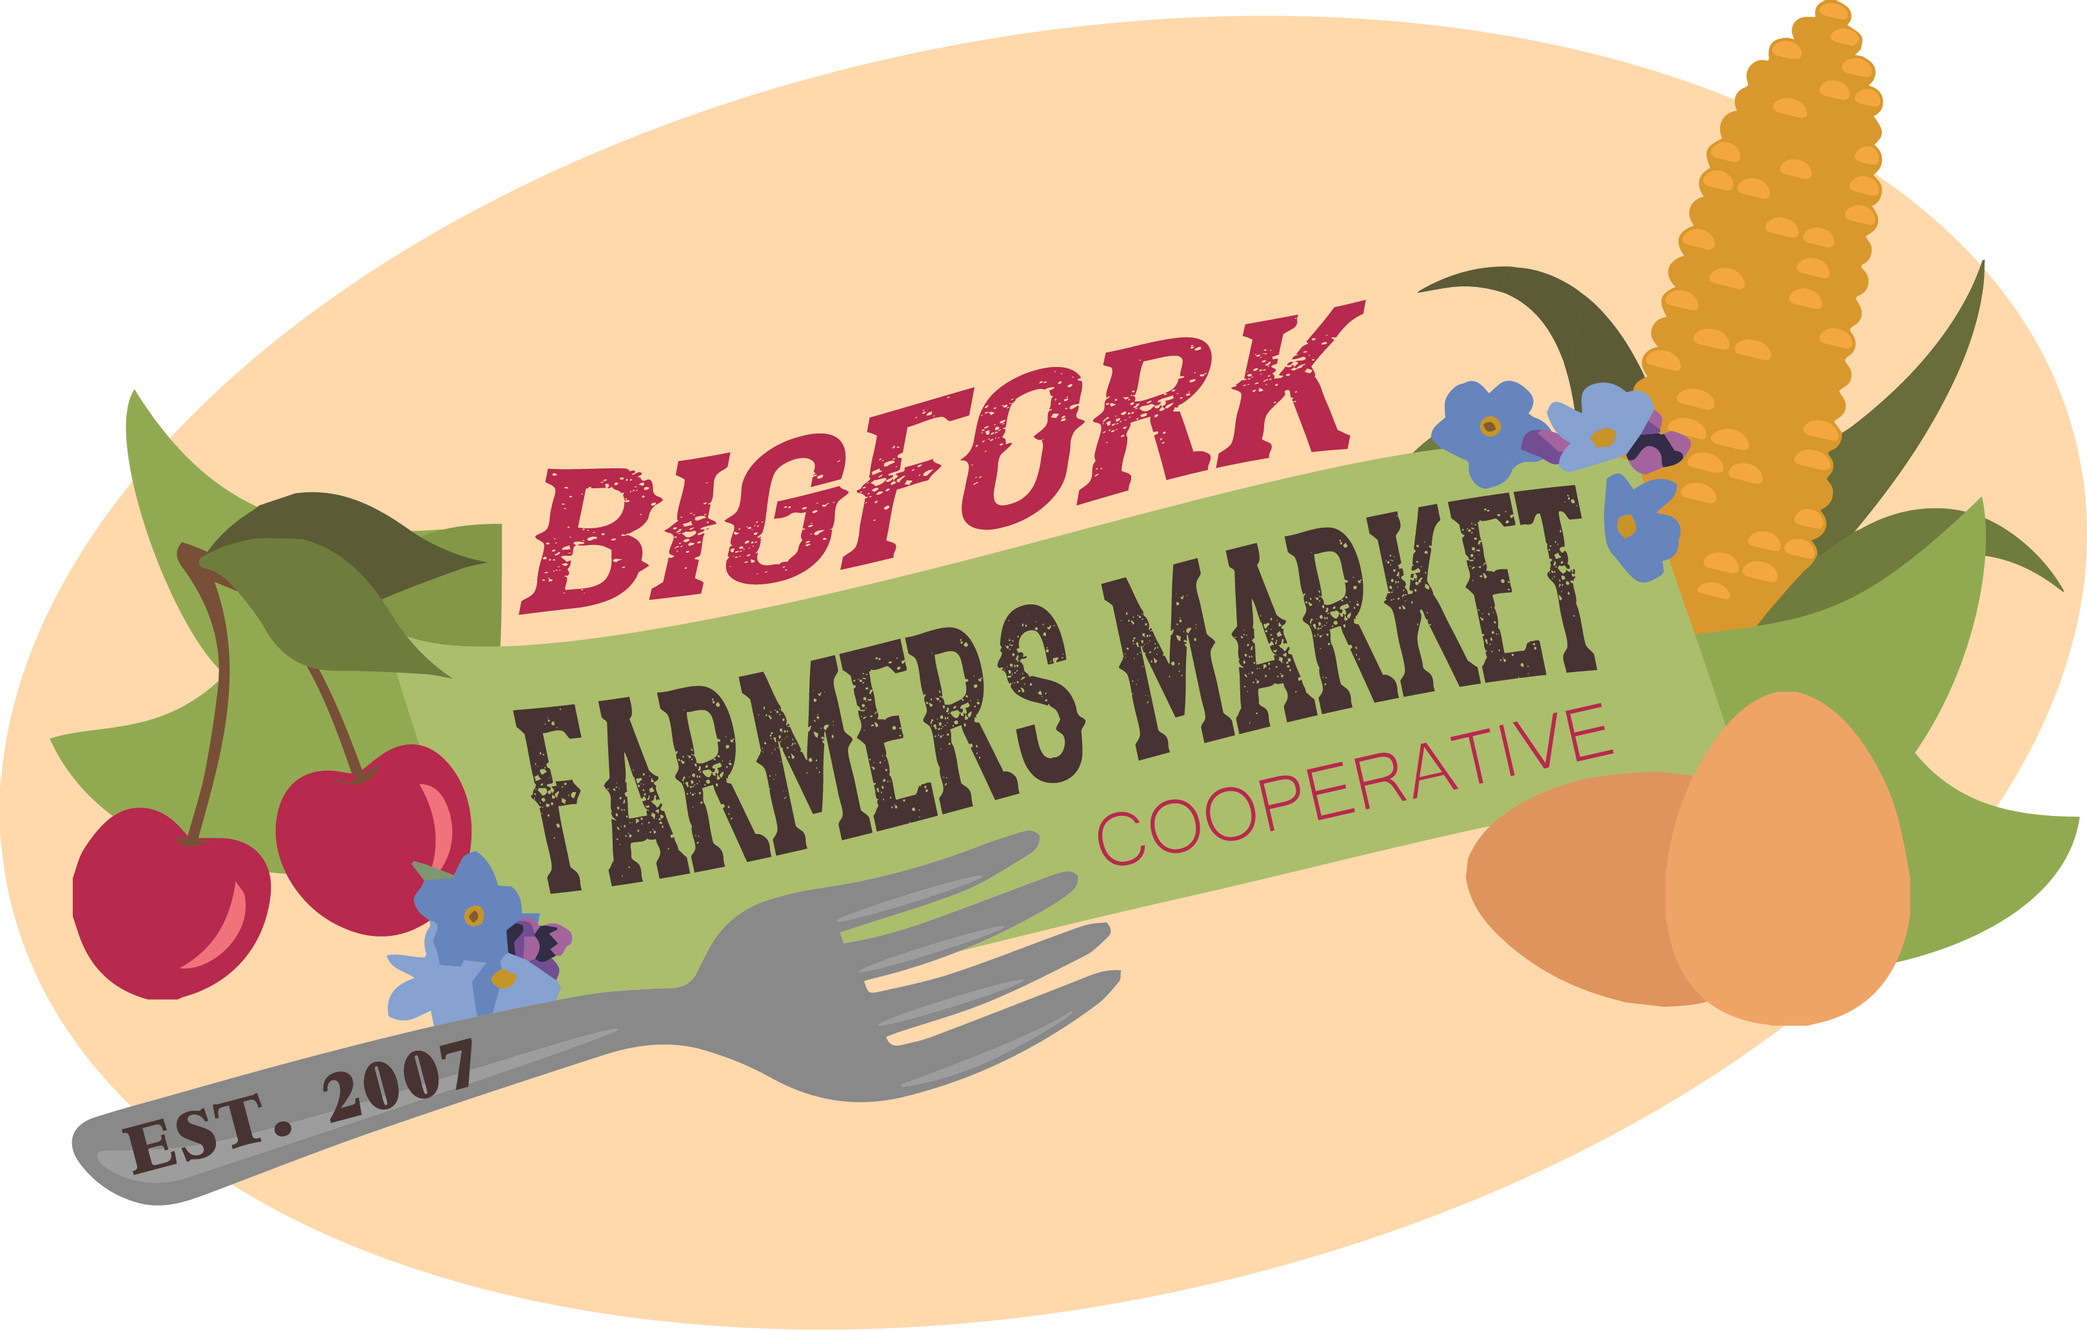 Bigfork Farmers Market Cooperative